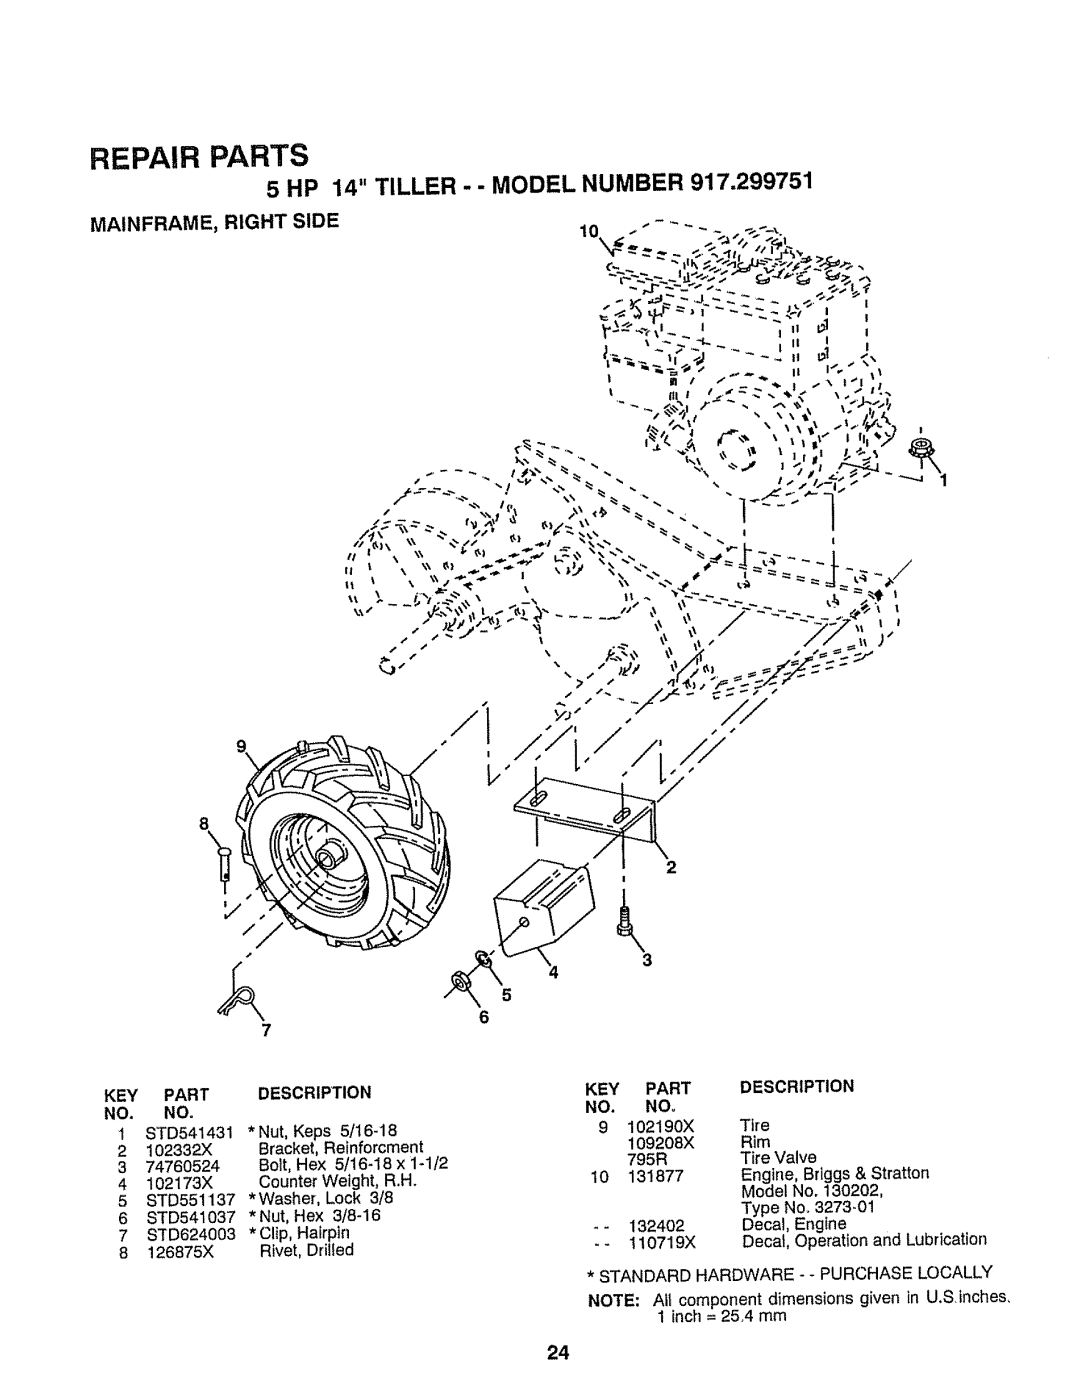 Craftsman 917-299751 owner manual Repair Parts, 5 HP 14 TILLER - - MODEL NUMBER, Mainframe, Right Side 